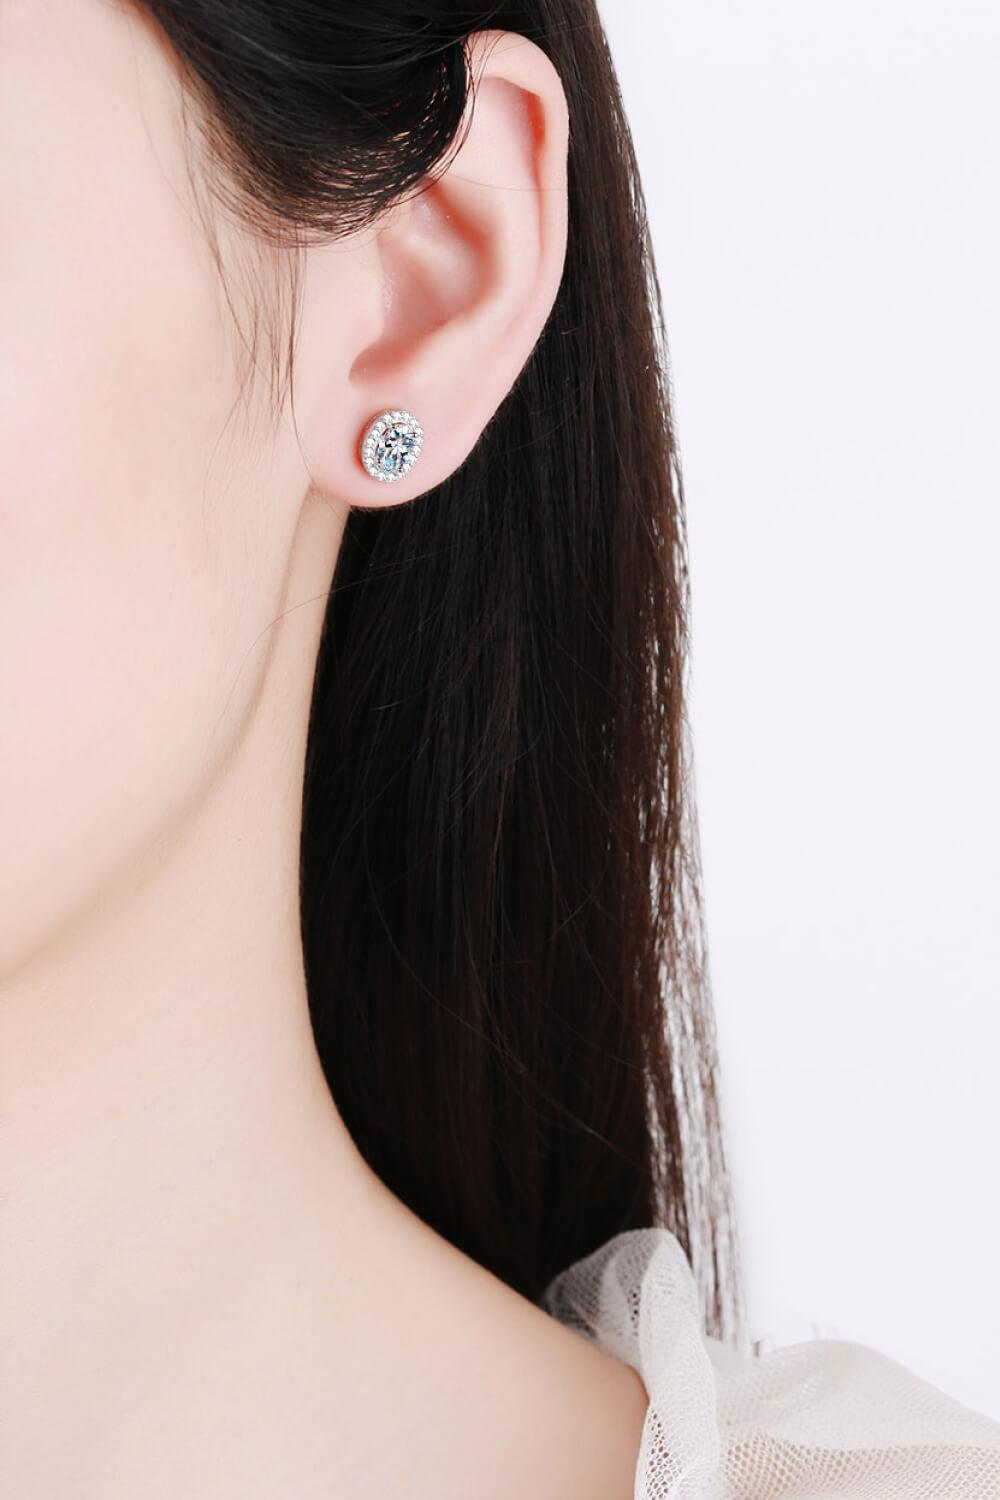 Future Style Moissanite Stud Earrings - The Fiery Jasmine